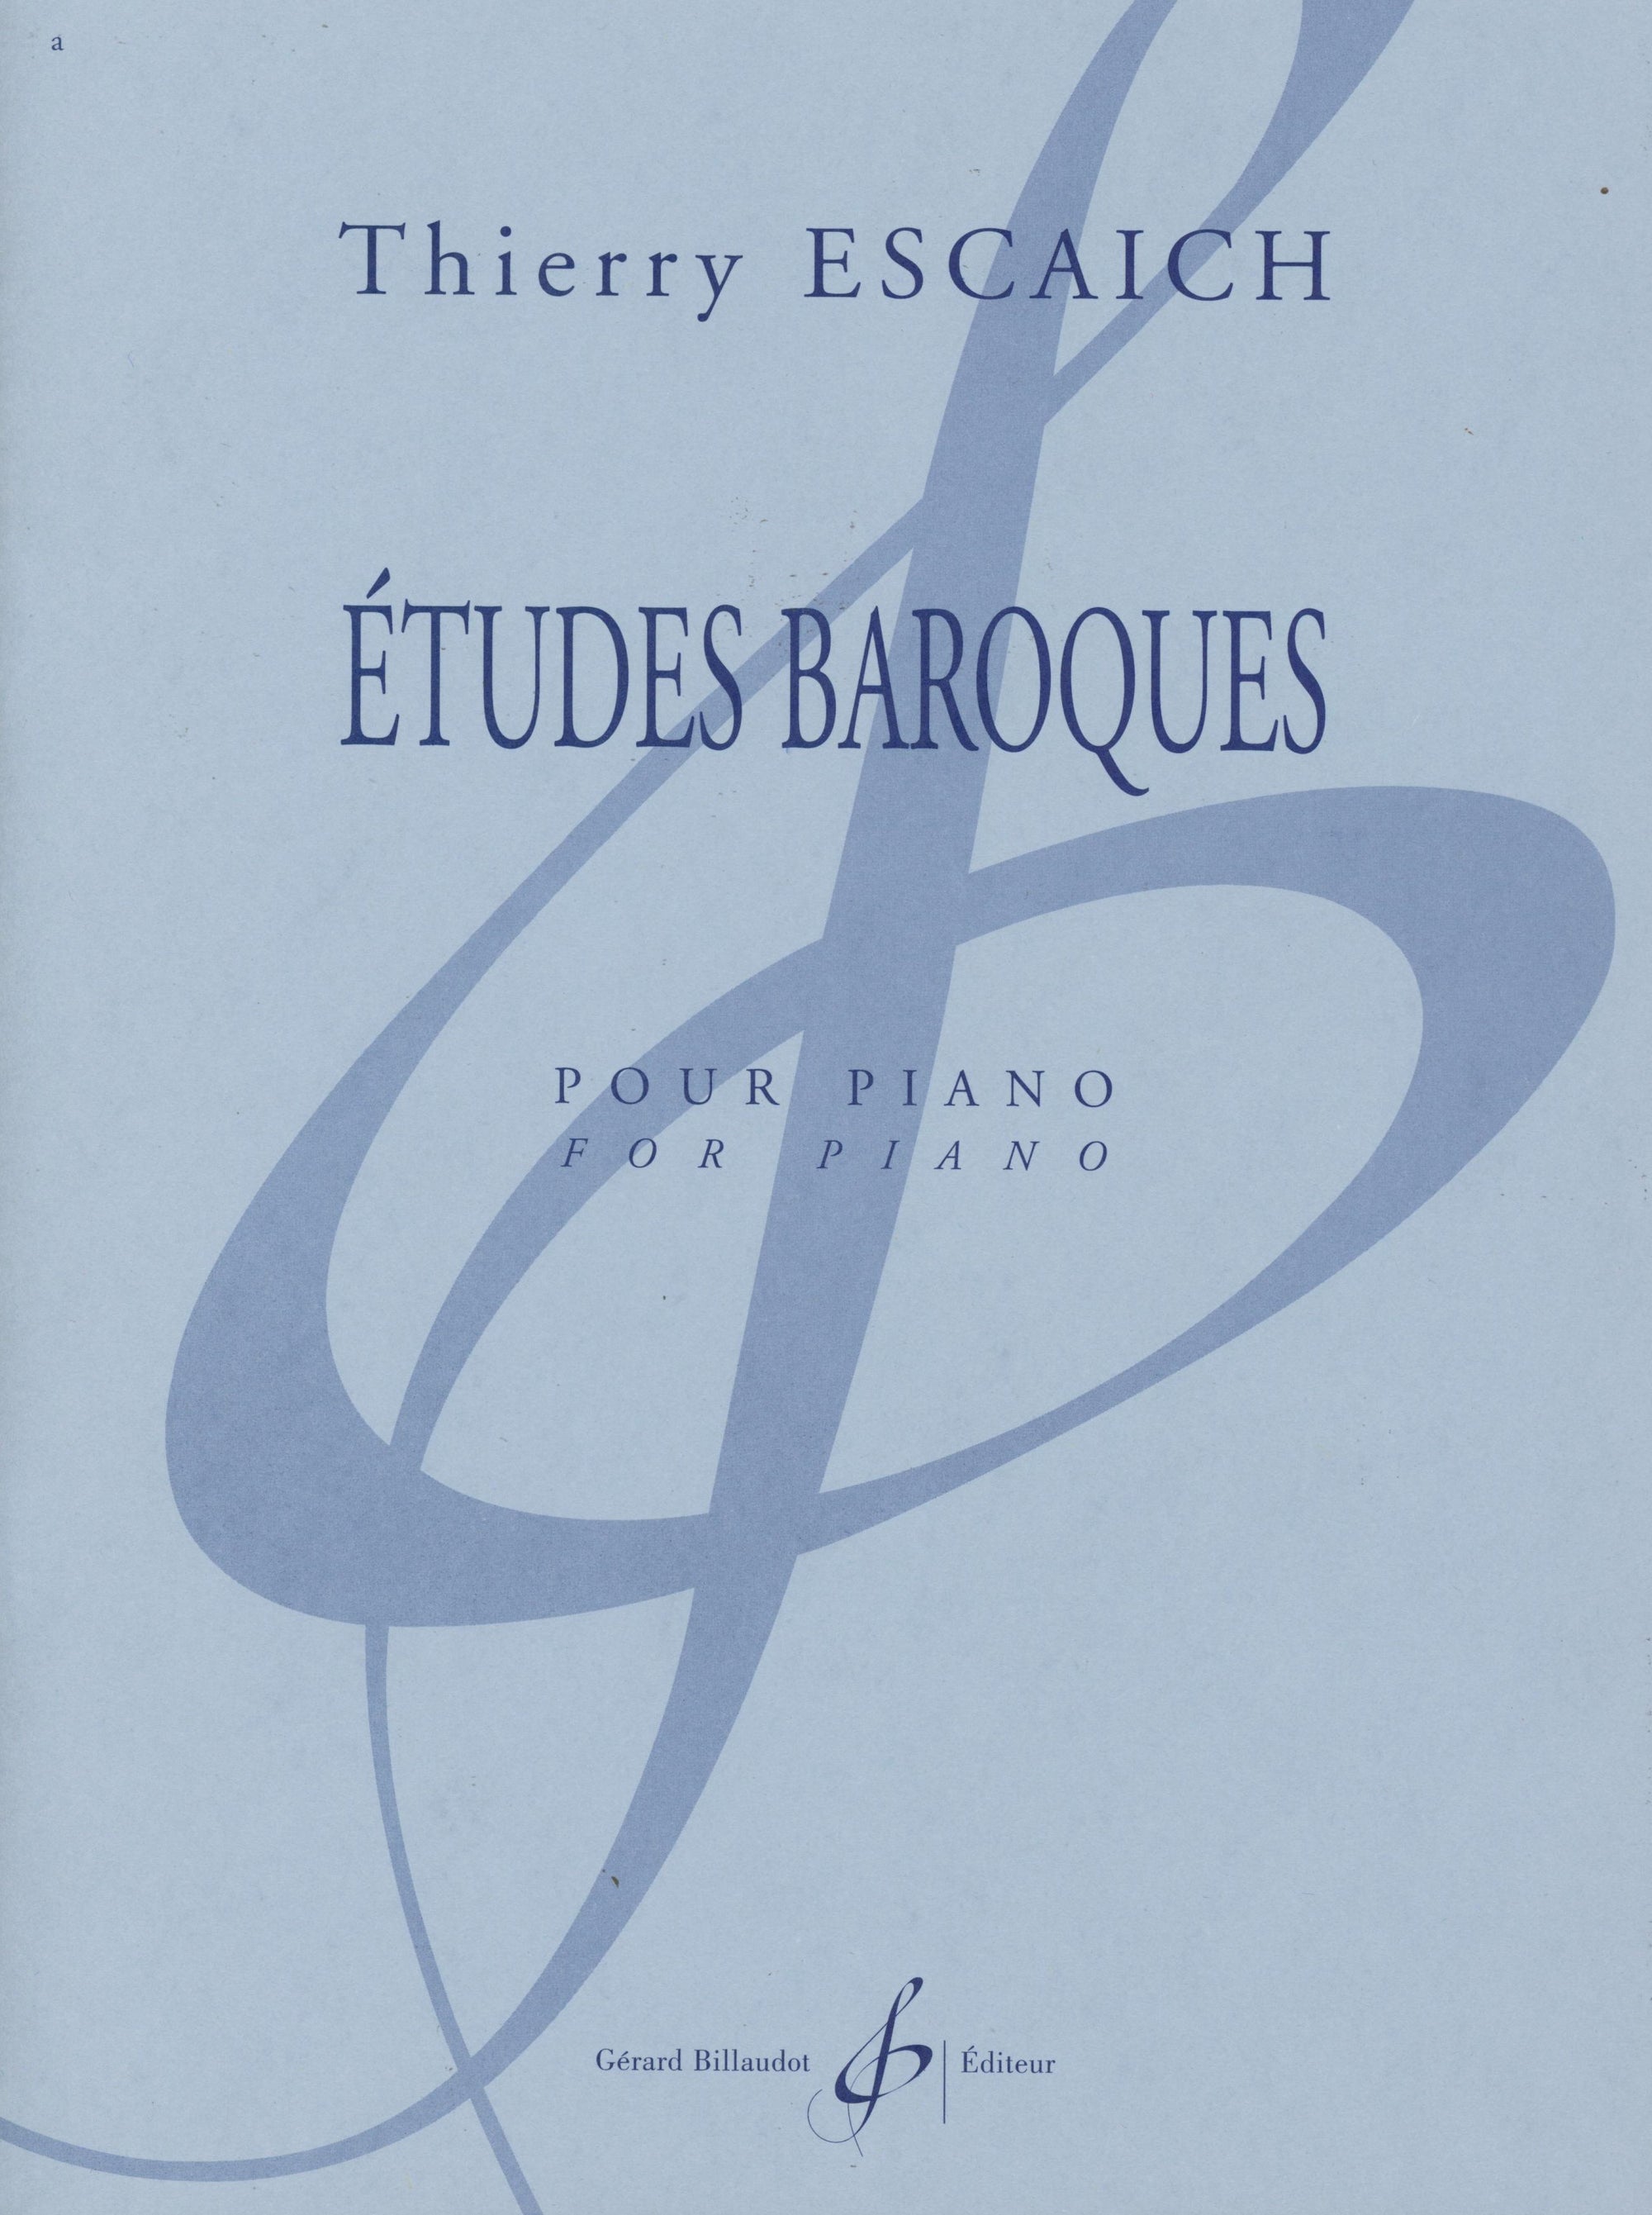 Escaich: Études baroques